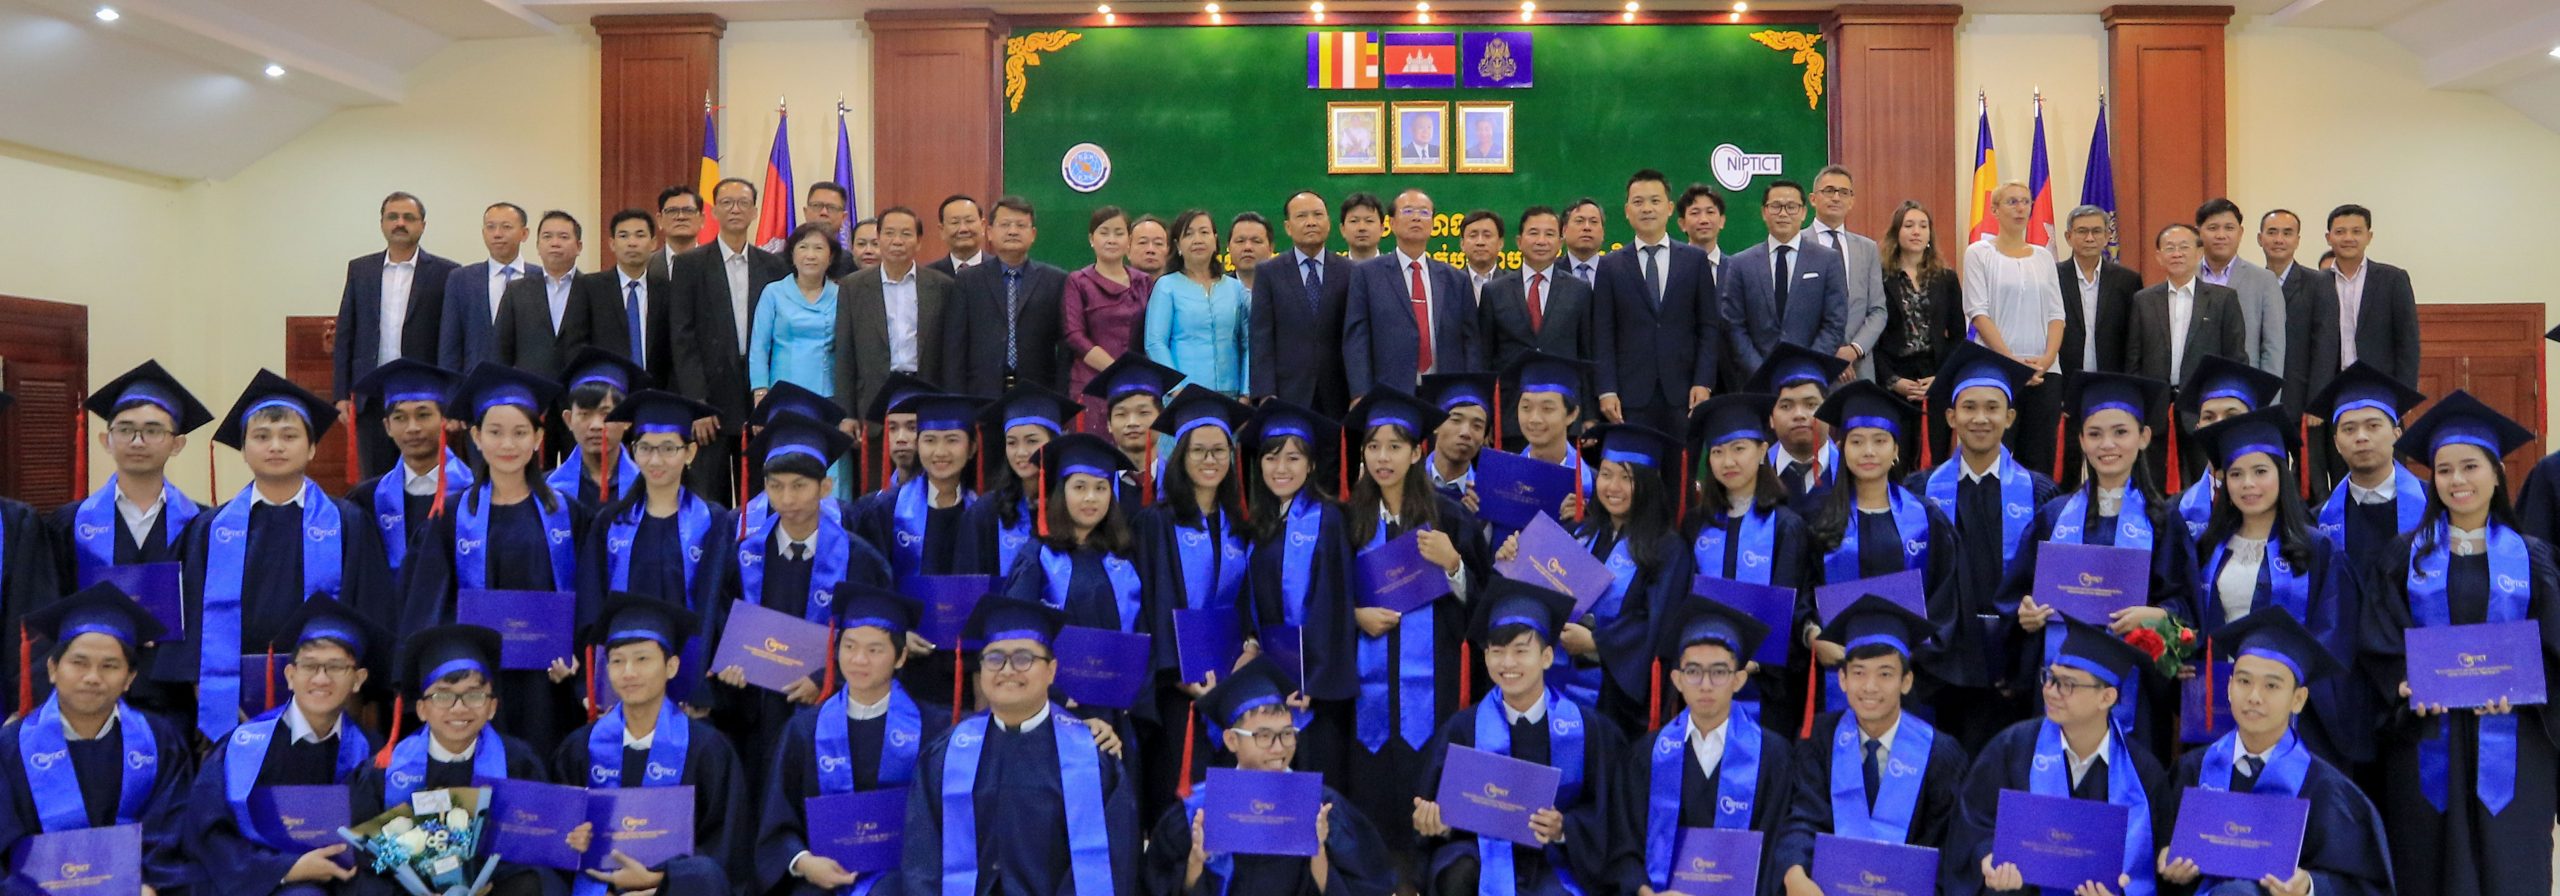 ​H.E. Tram Iv Tek Presided over the Graduation Ceremony of the First Batch of NIPTICT Graduates